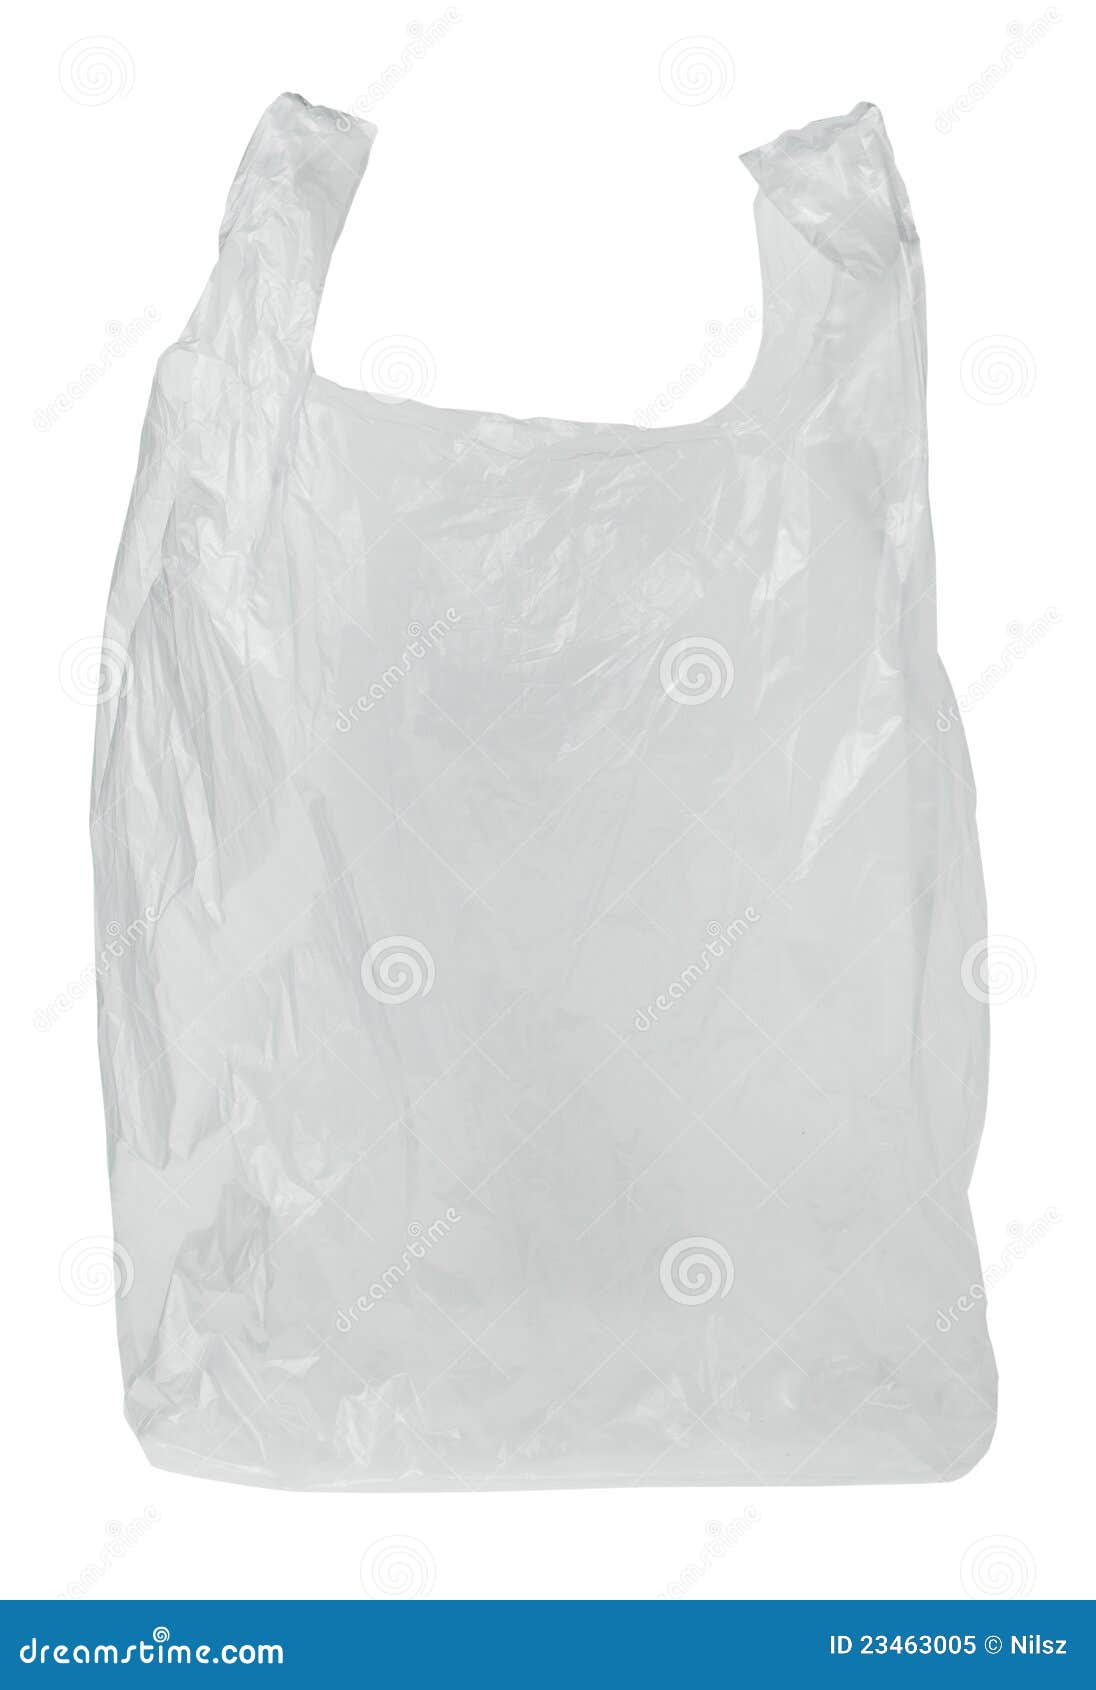 Royalty Free Stock Photo: Transparent plastic bag